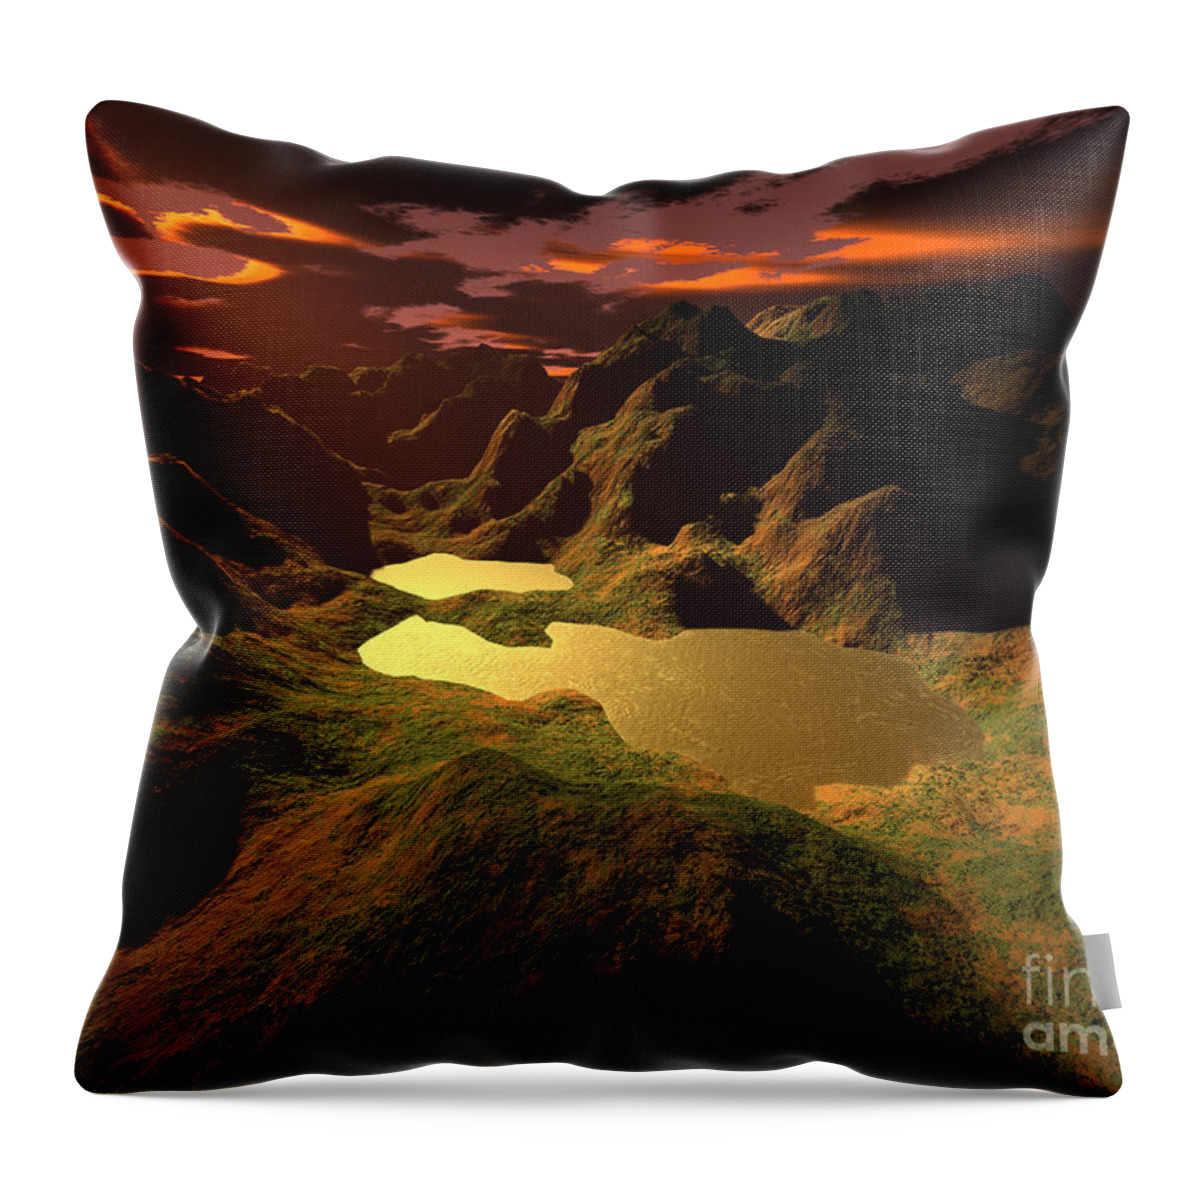 Digital Art Throw Pillow featuring the digital art The Golden Lake by Gaspar Avila